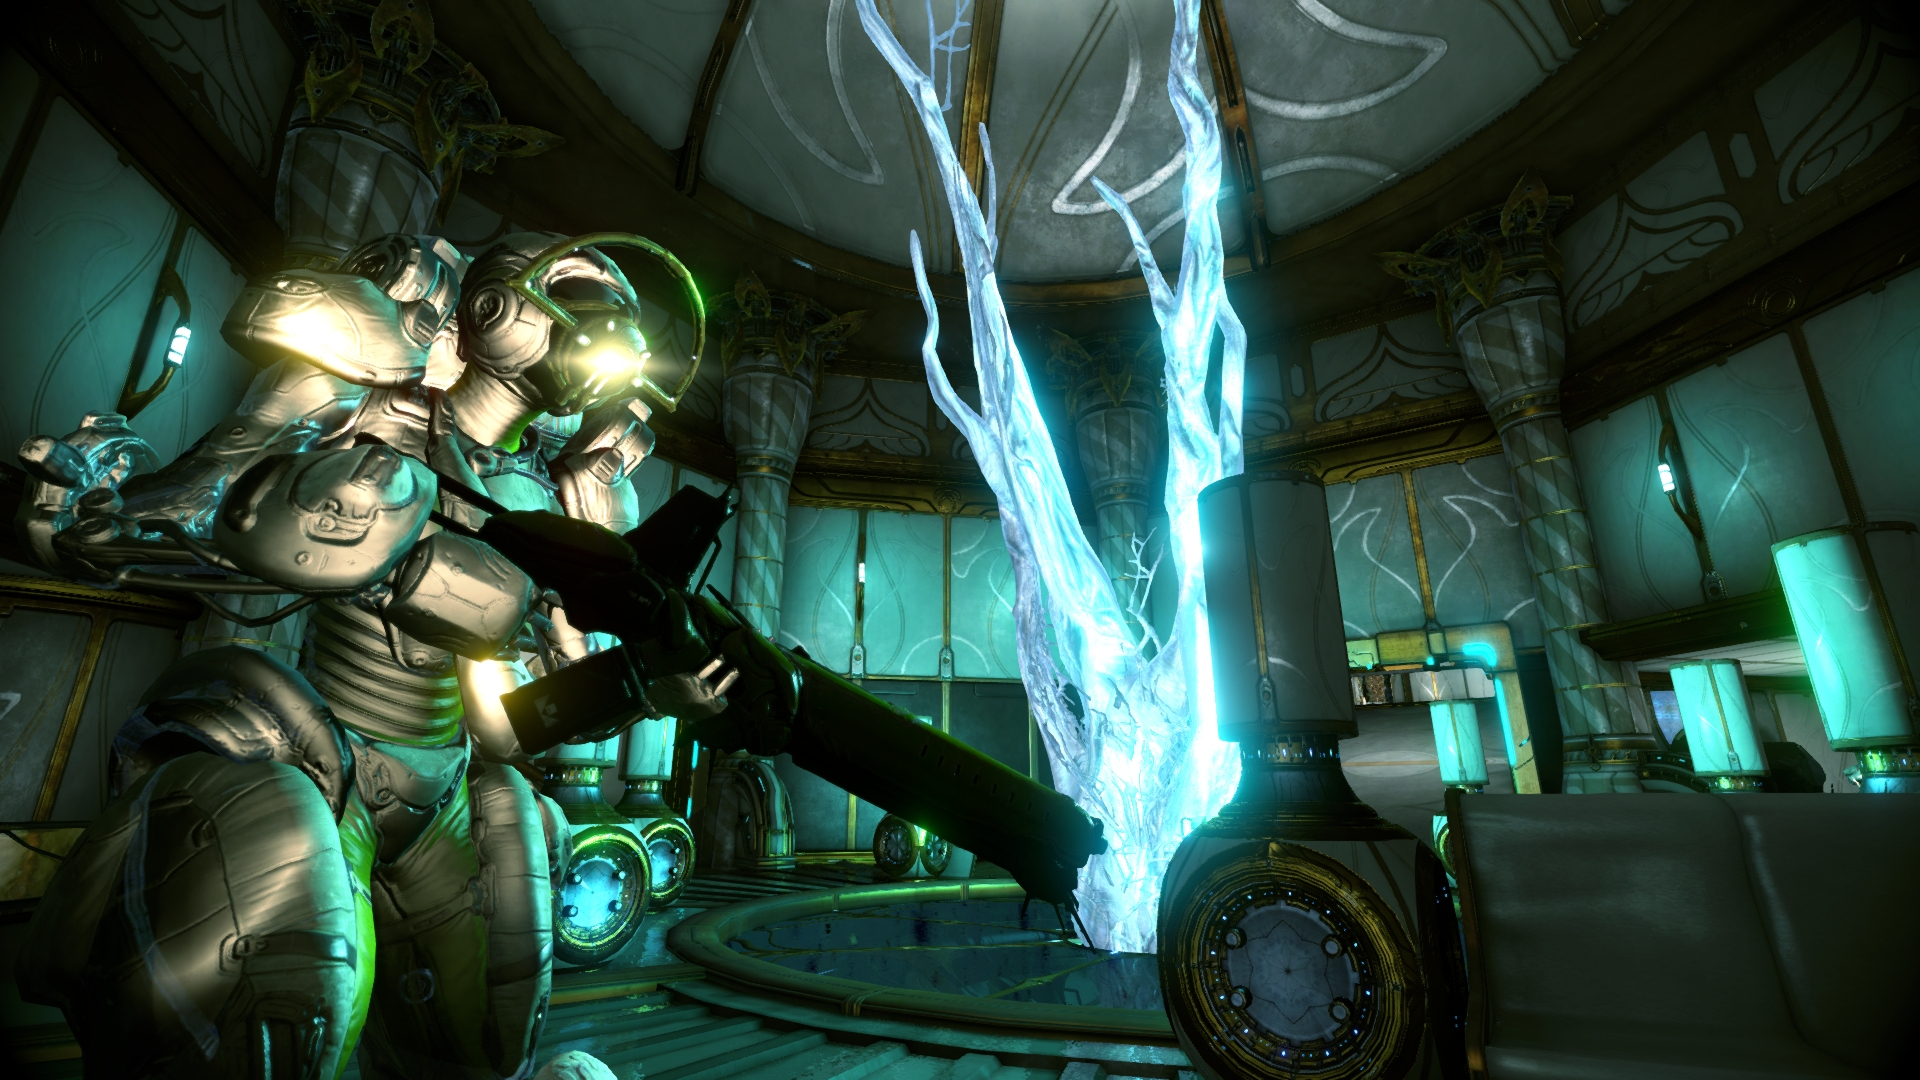 Free shooting games: Warframe. A screenshot shows an alien armed with a gun walks through a building